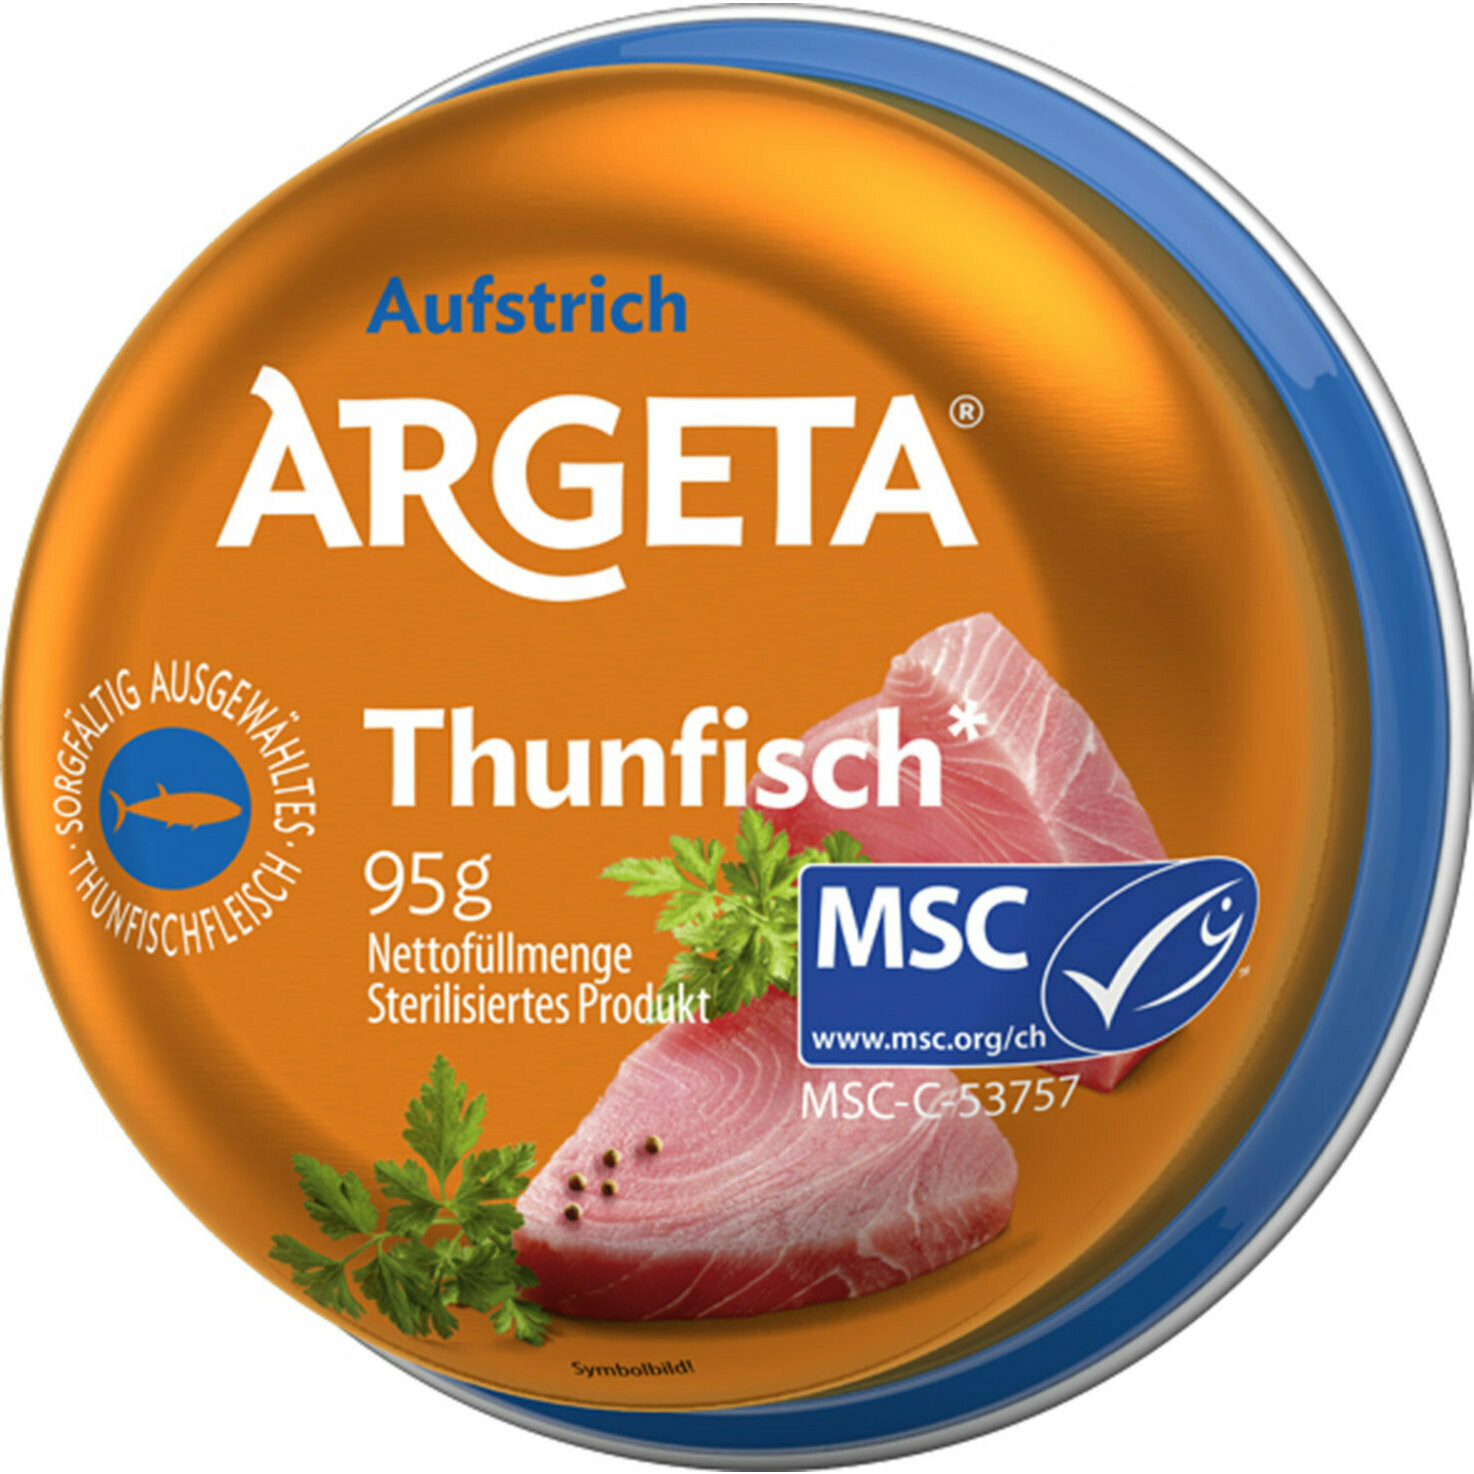 Argeta tuna spread